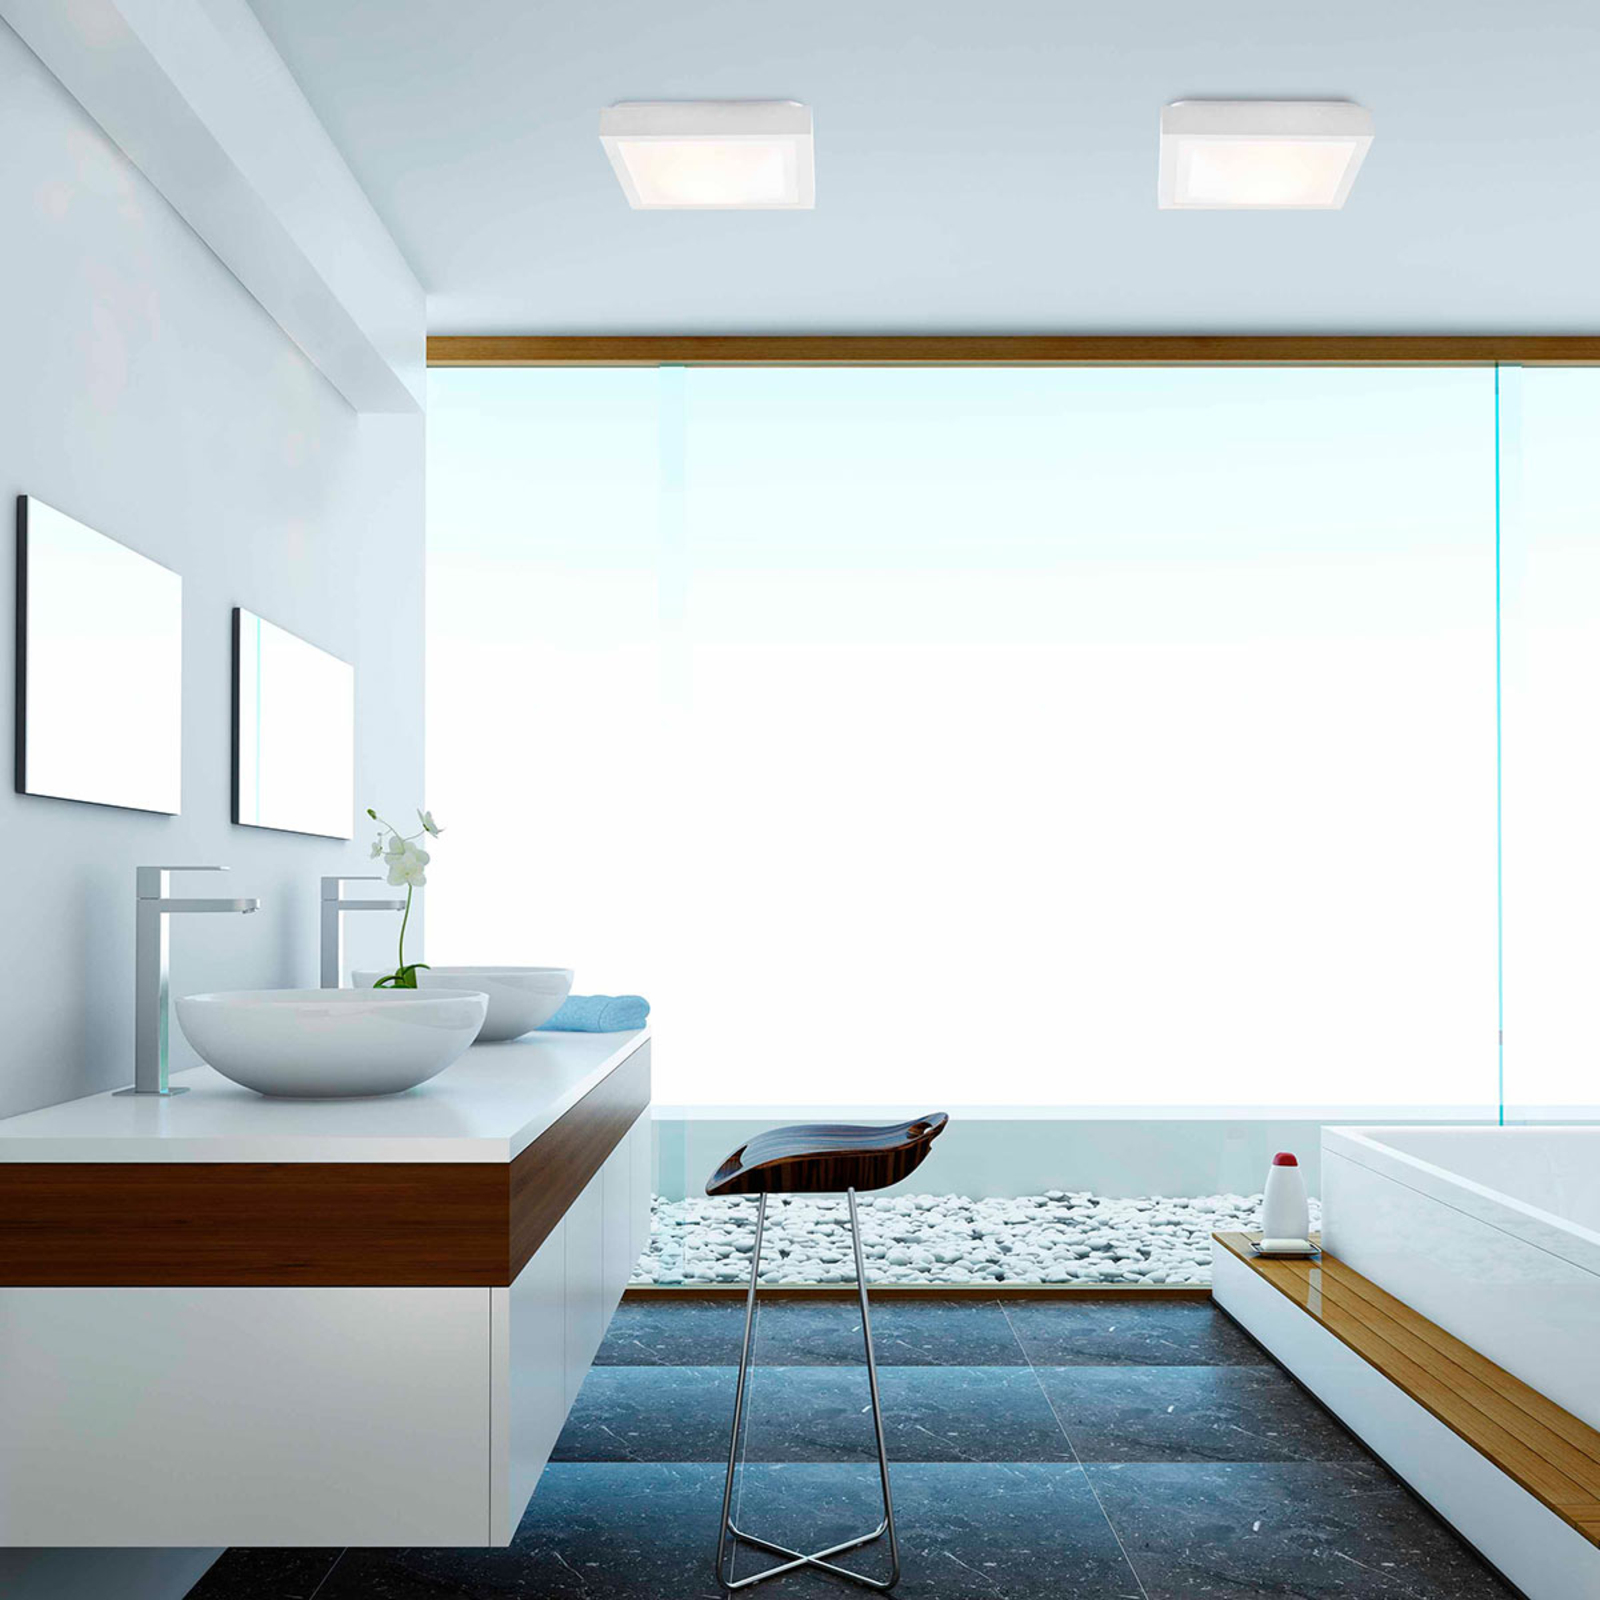 Kúpeľňové stropné svietidlo Tola, 32 x 32 cm biela